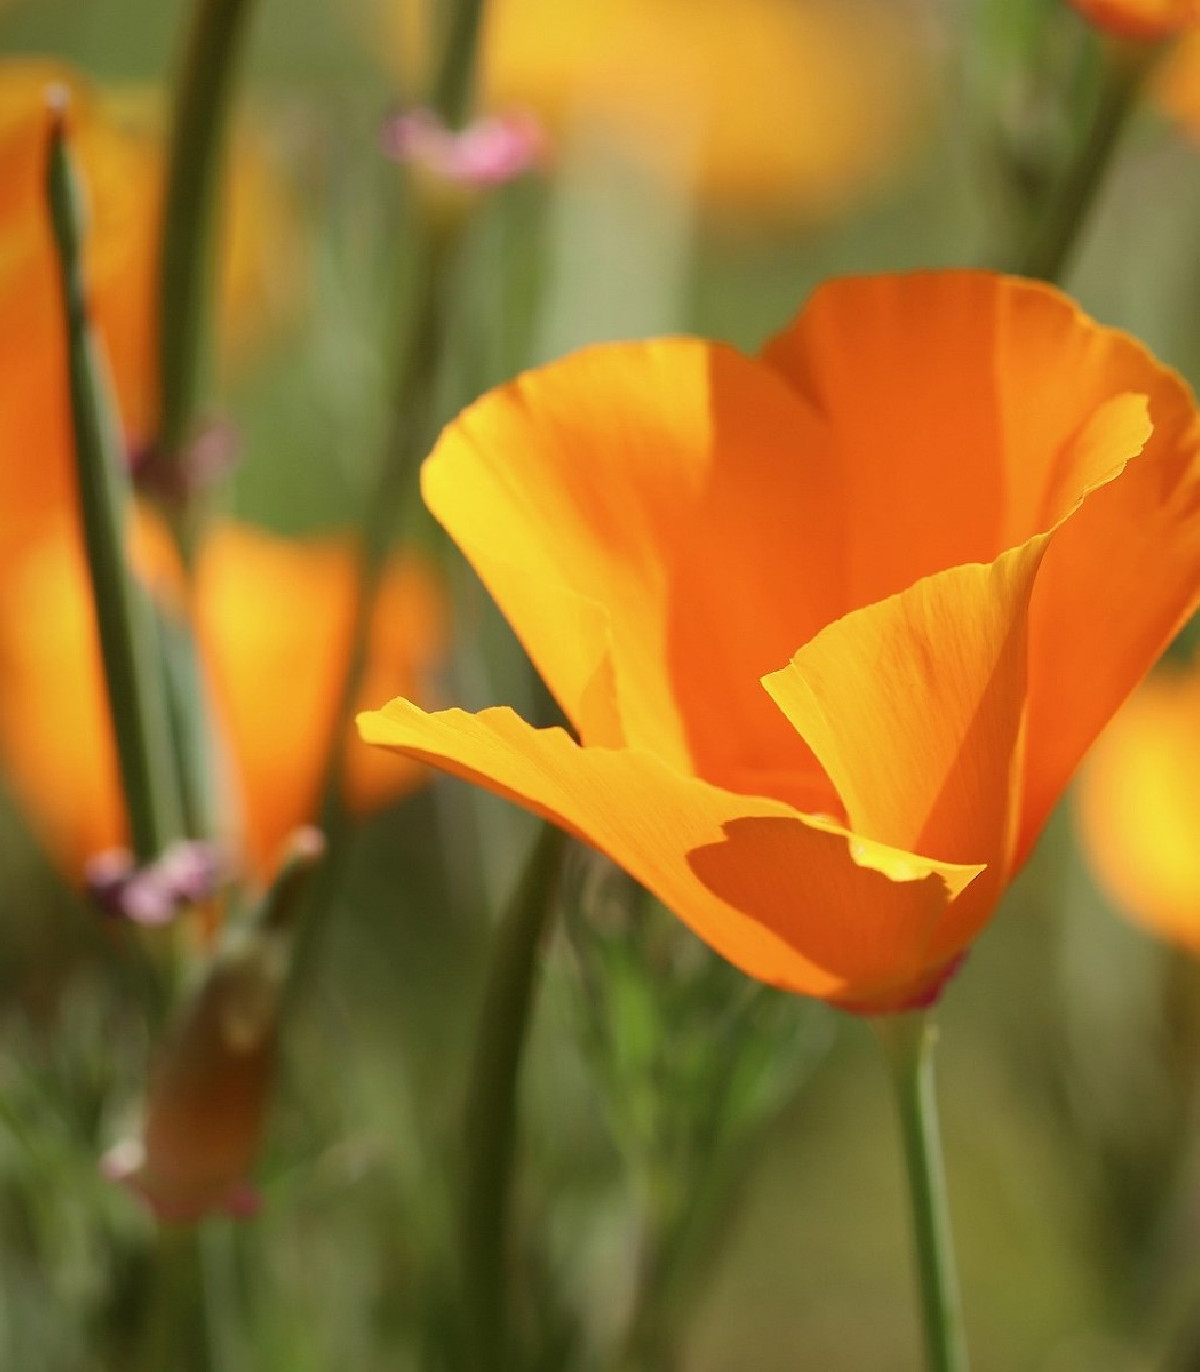 Sluncovka kalifornská oranžová - Eschscholzia californica - prodej semen - 200 ks